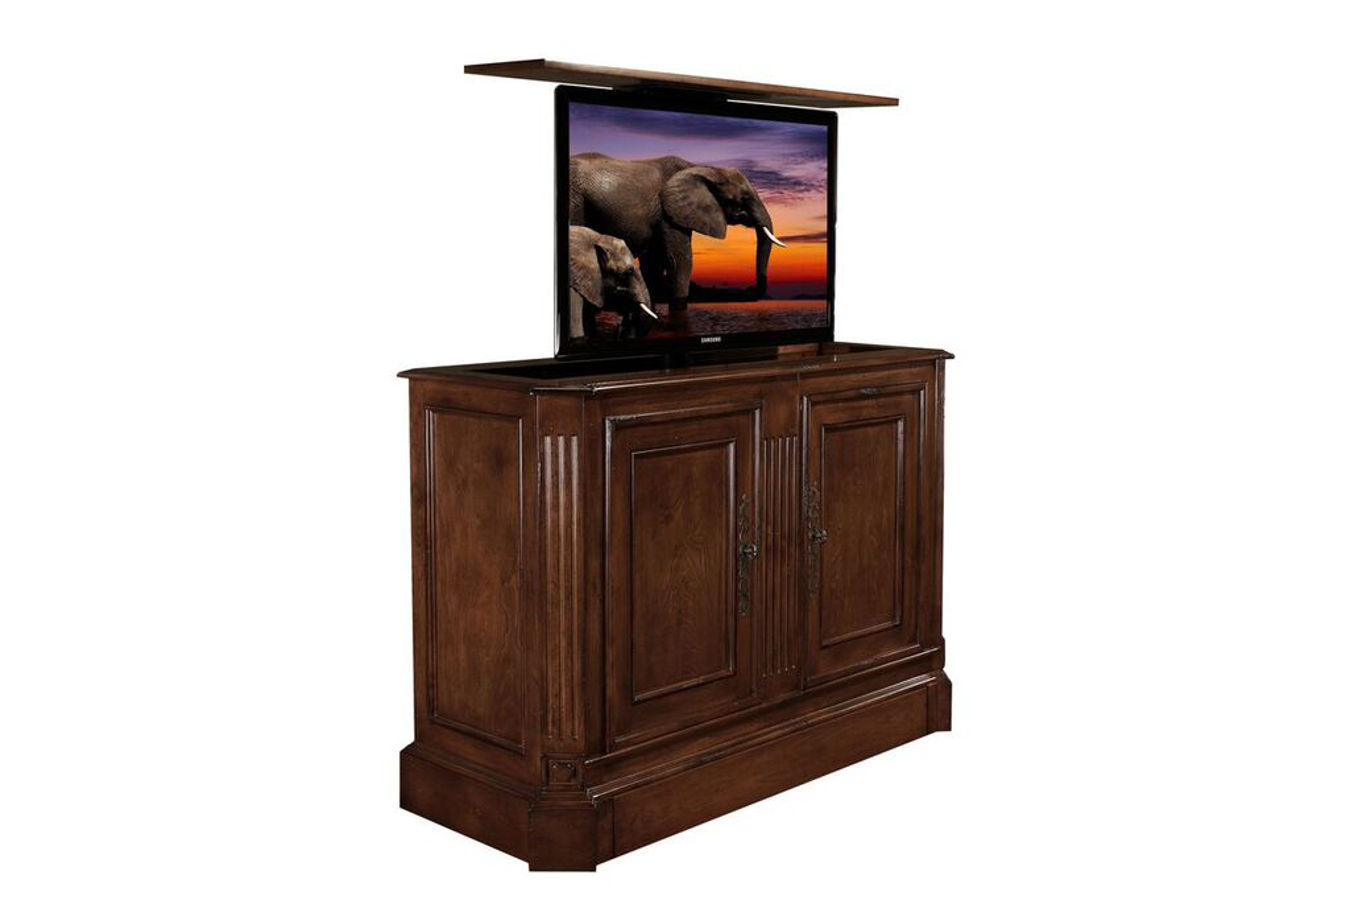 Mission Viejo TV lift kit furniture with flat screen